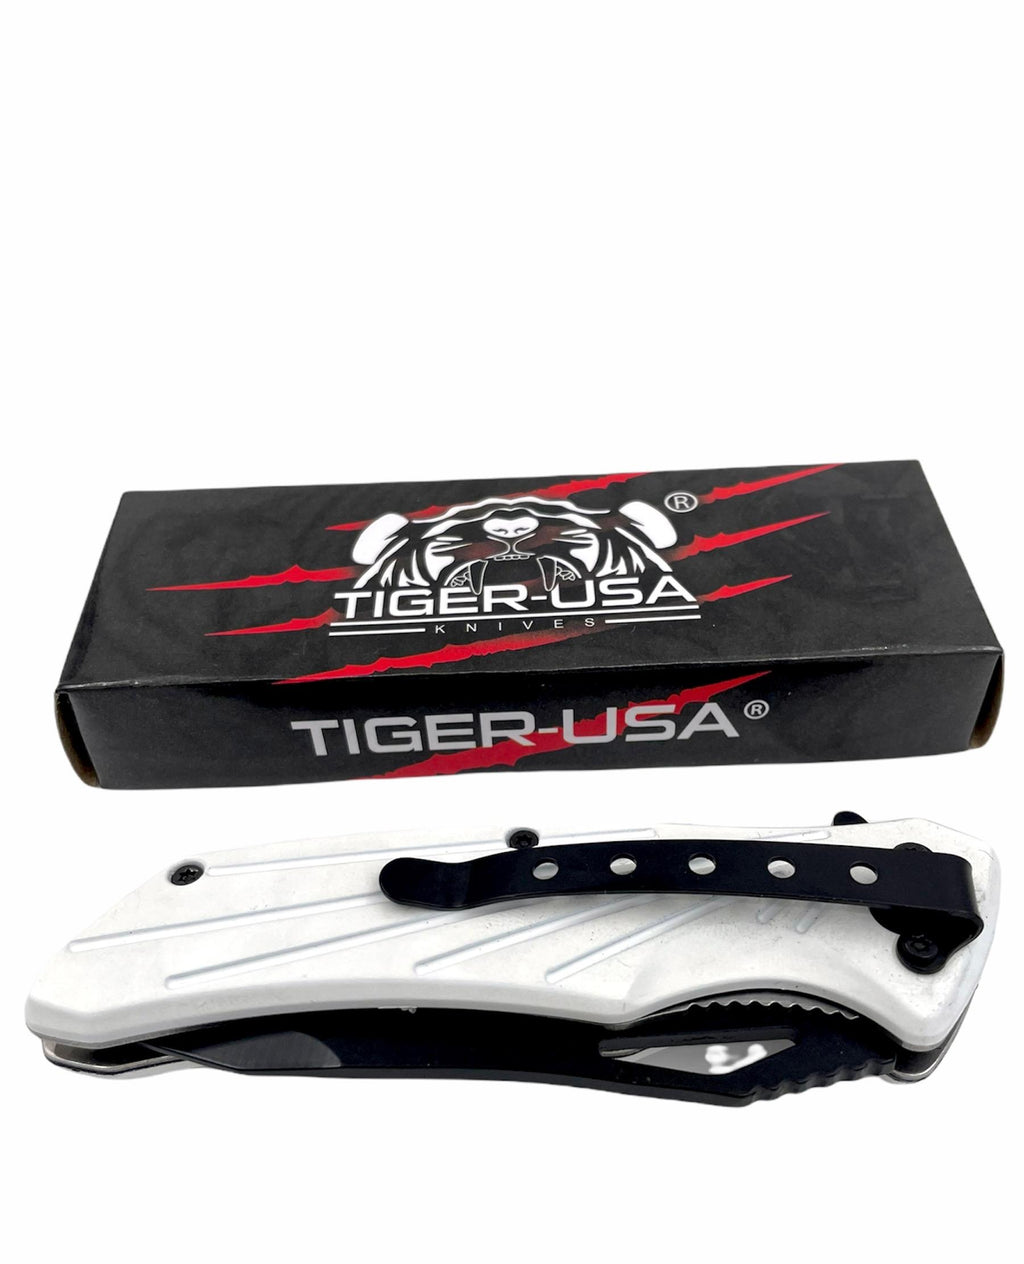 Tiger USA Spring Action Knife WHITE Tanto